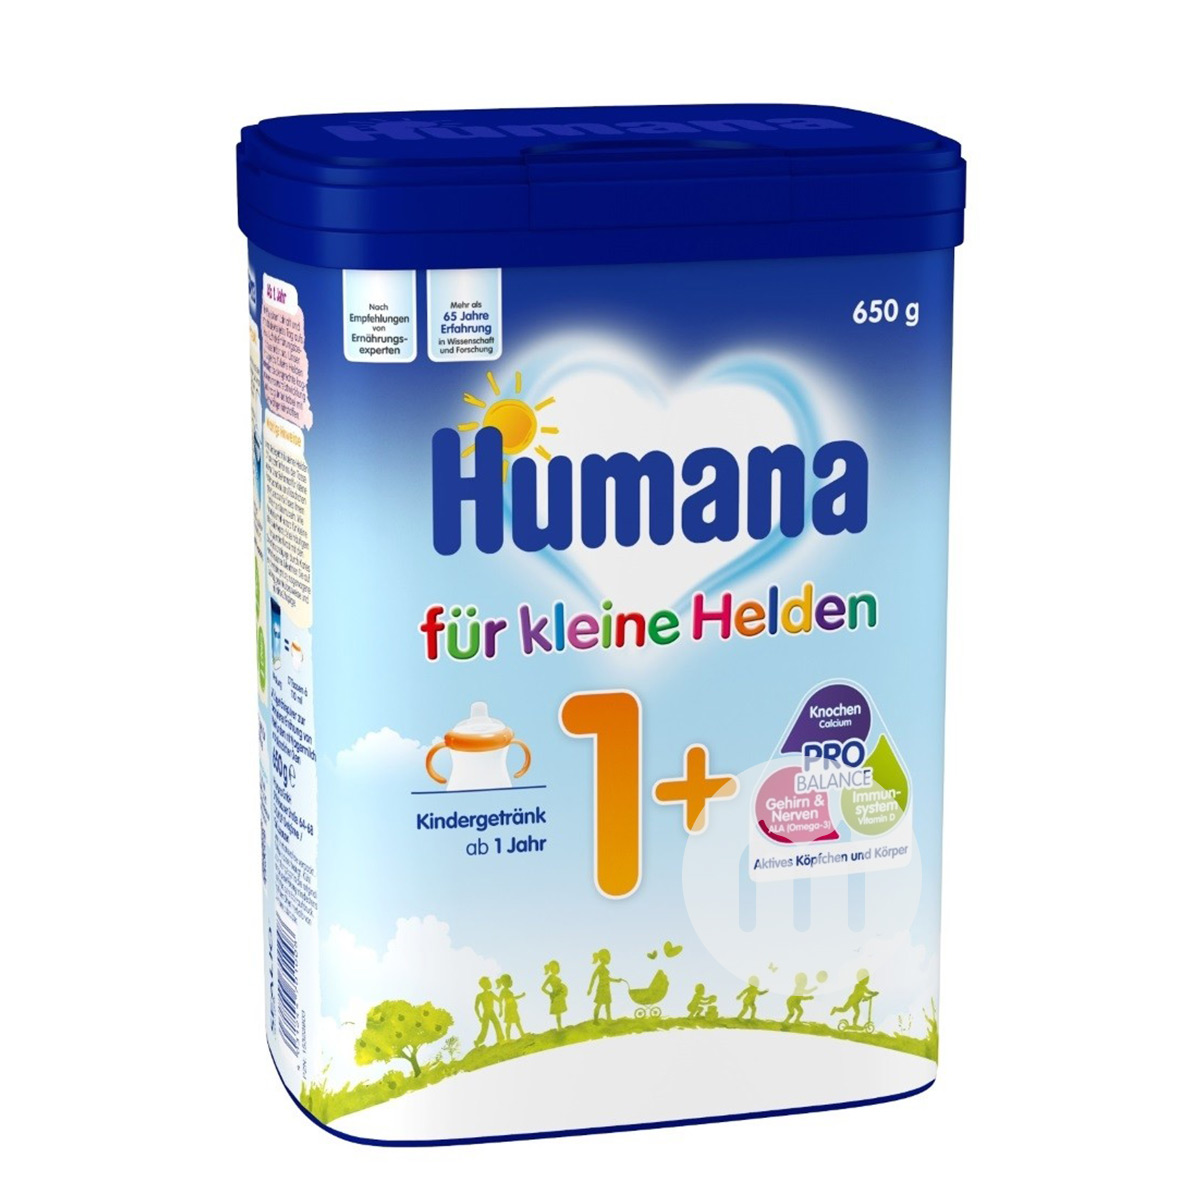 Humana 德國瑚瑪娜嬰兒奶粉1+段650g*4盒 海外本土原版